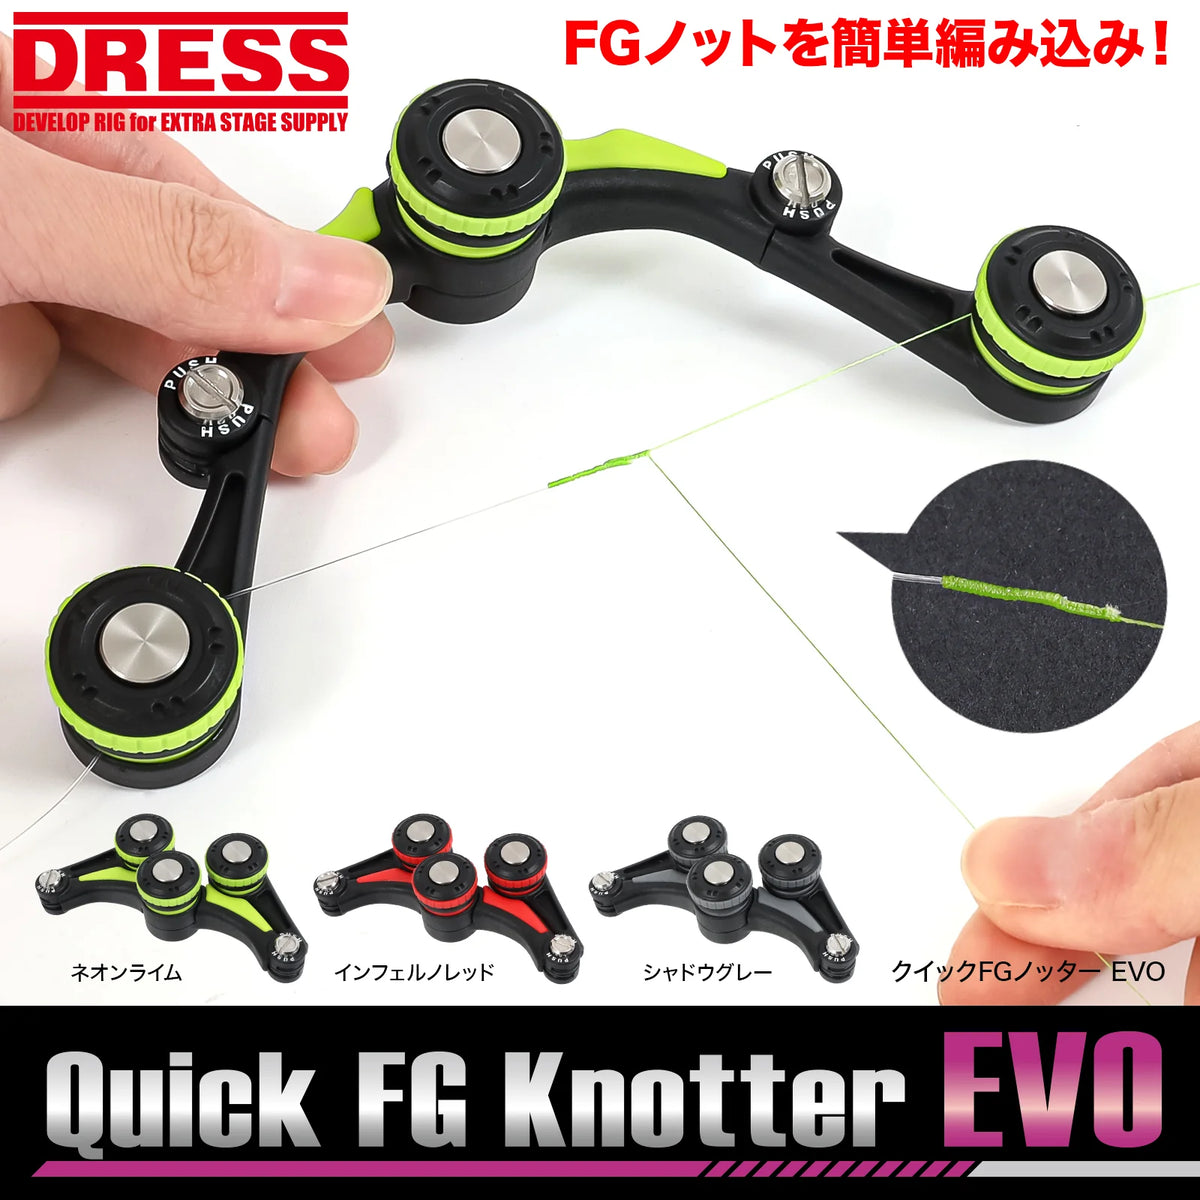 DRESS Quick FG knotter EVO knot tightener braiding assist